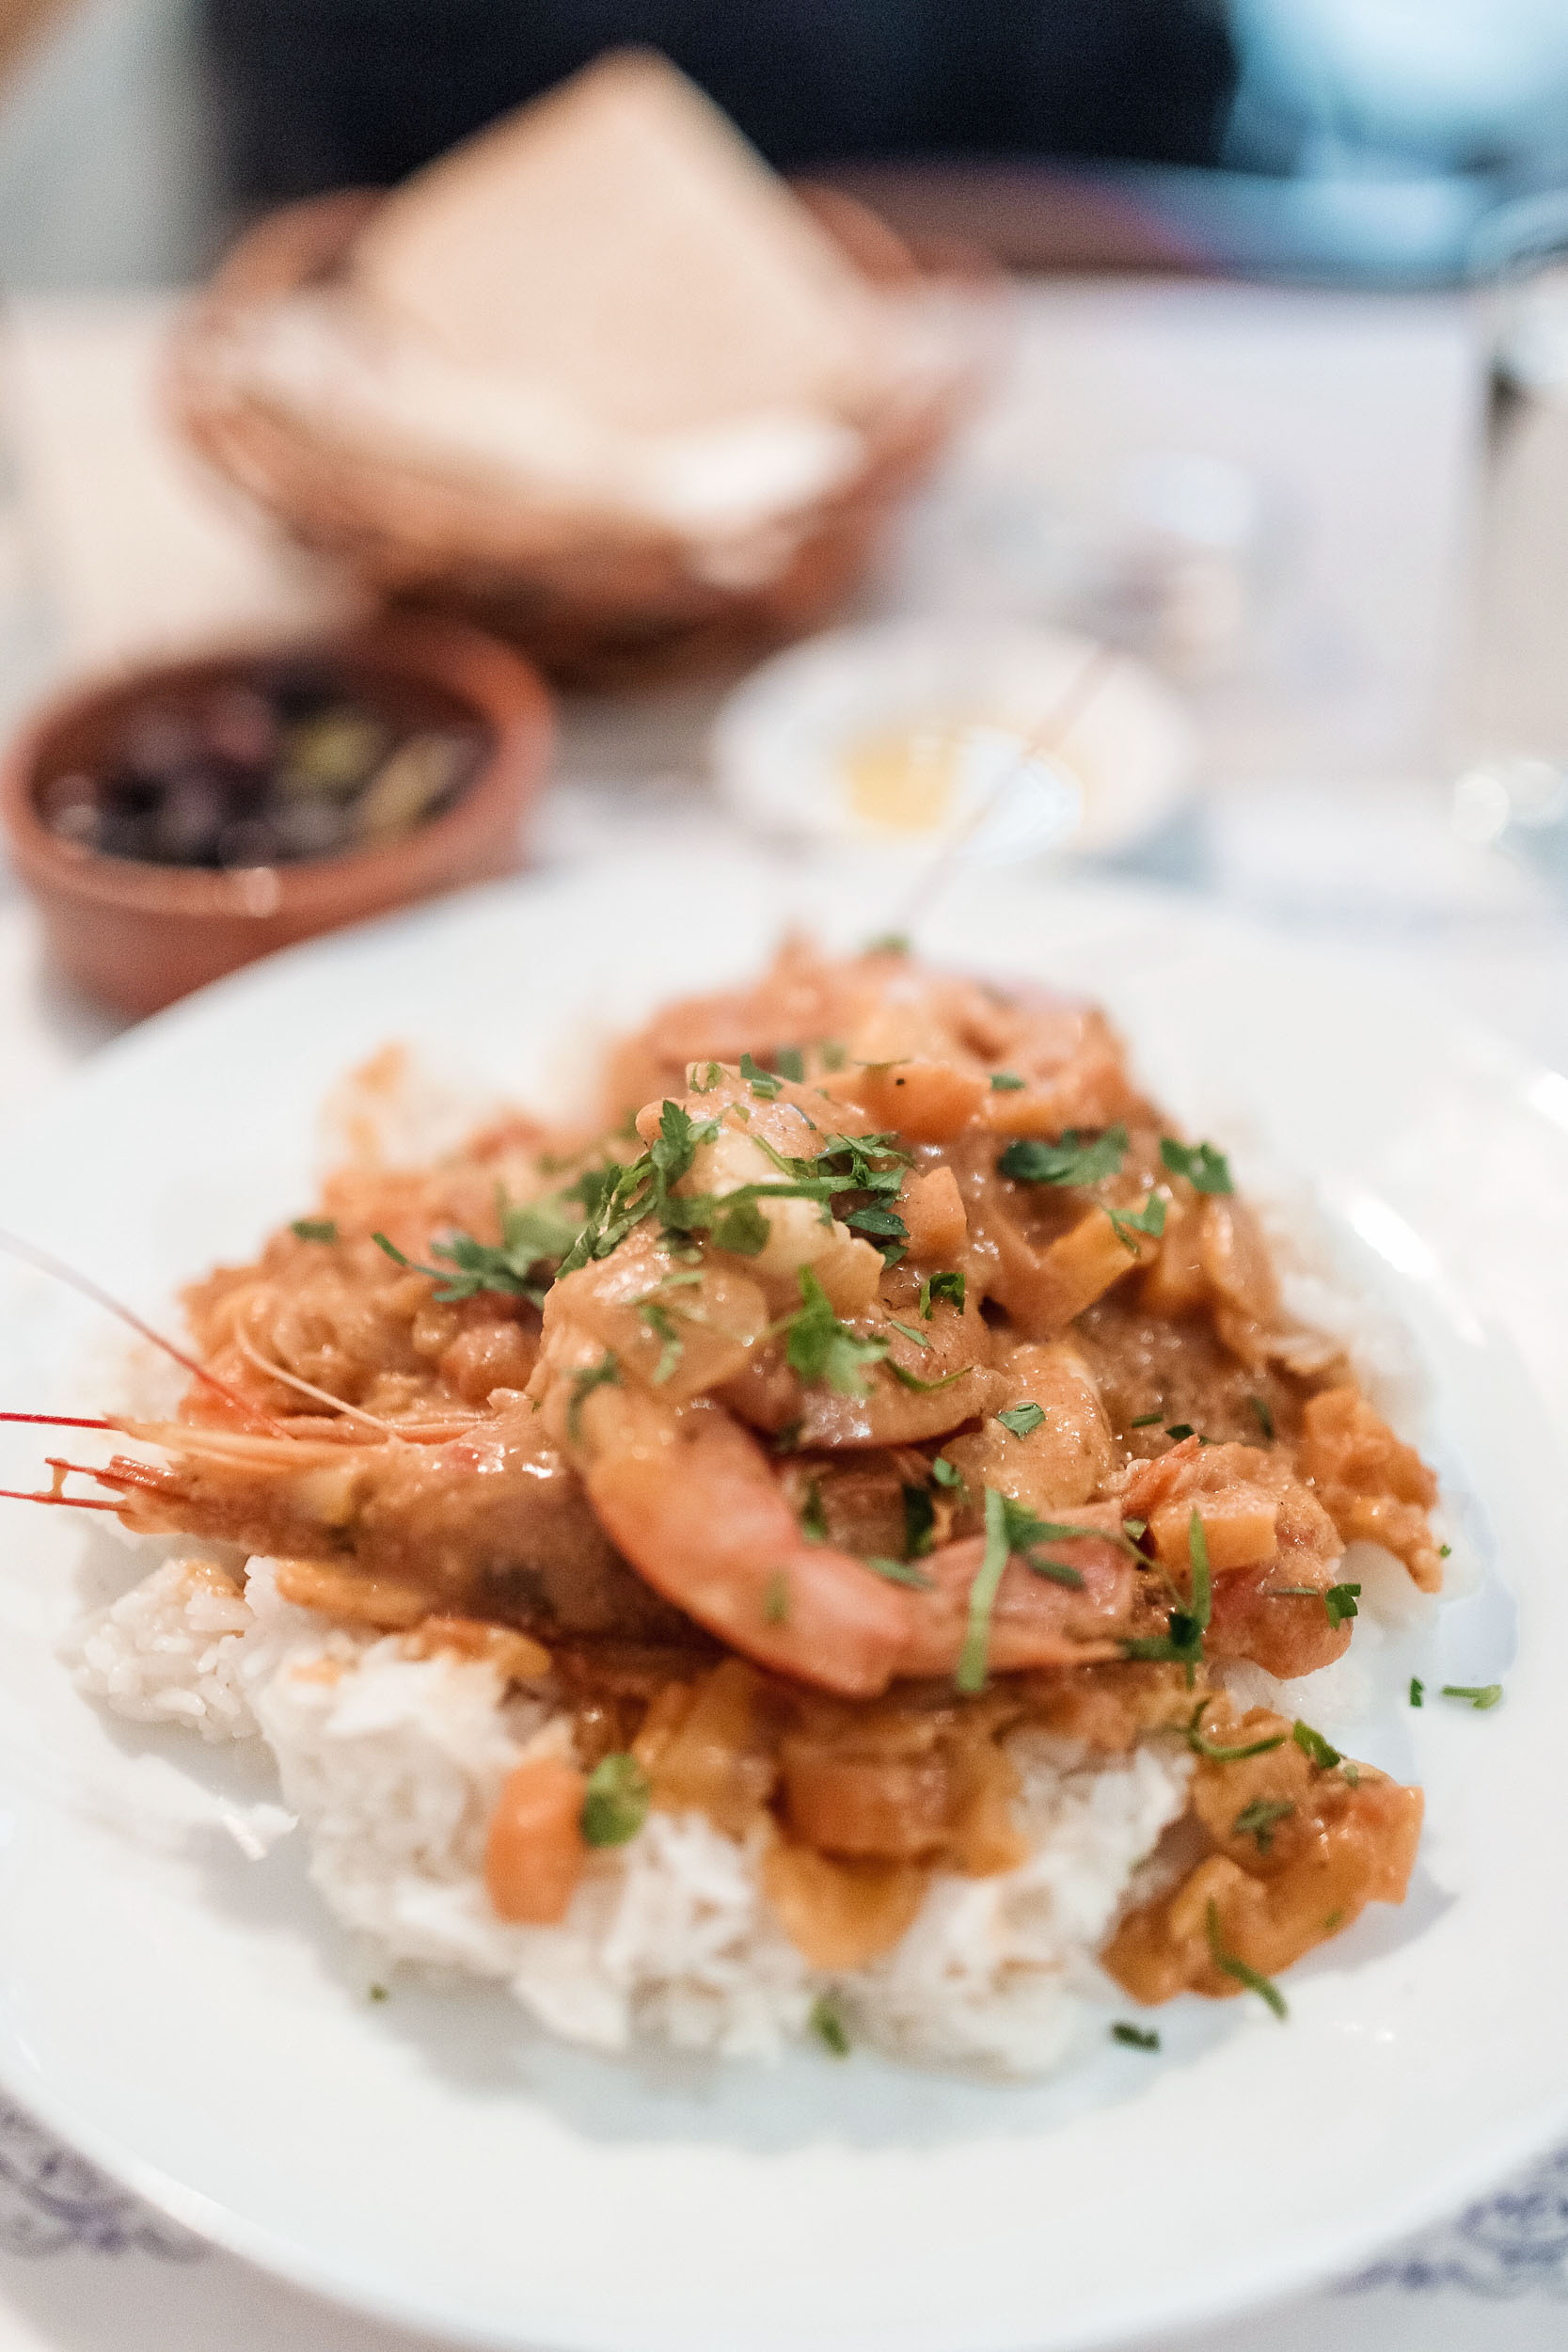 A Portuguese shrimp curry over rice from Taberna da Rua das Flores in Lisbon